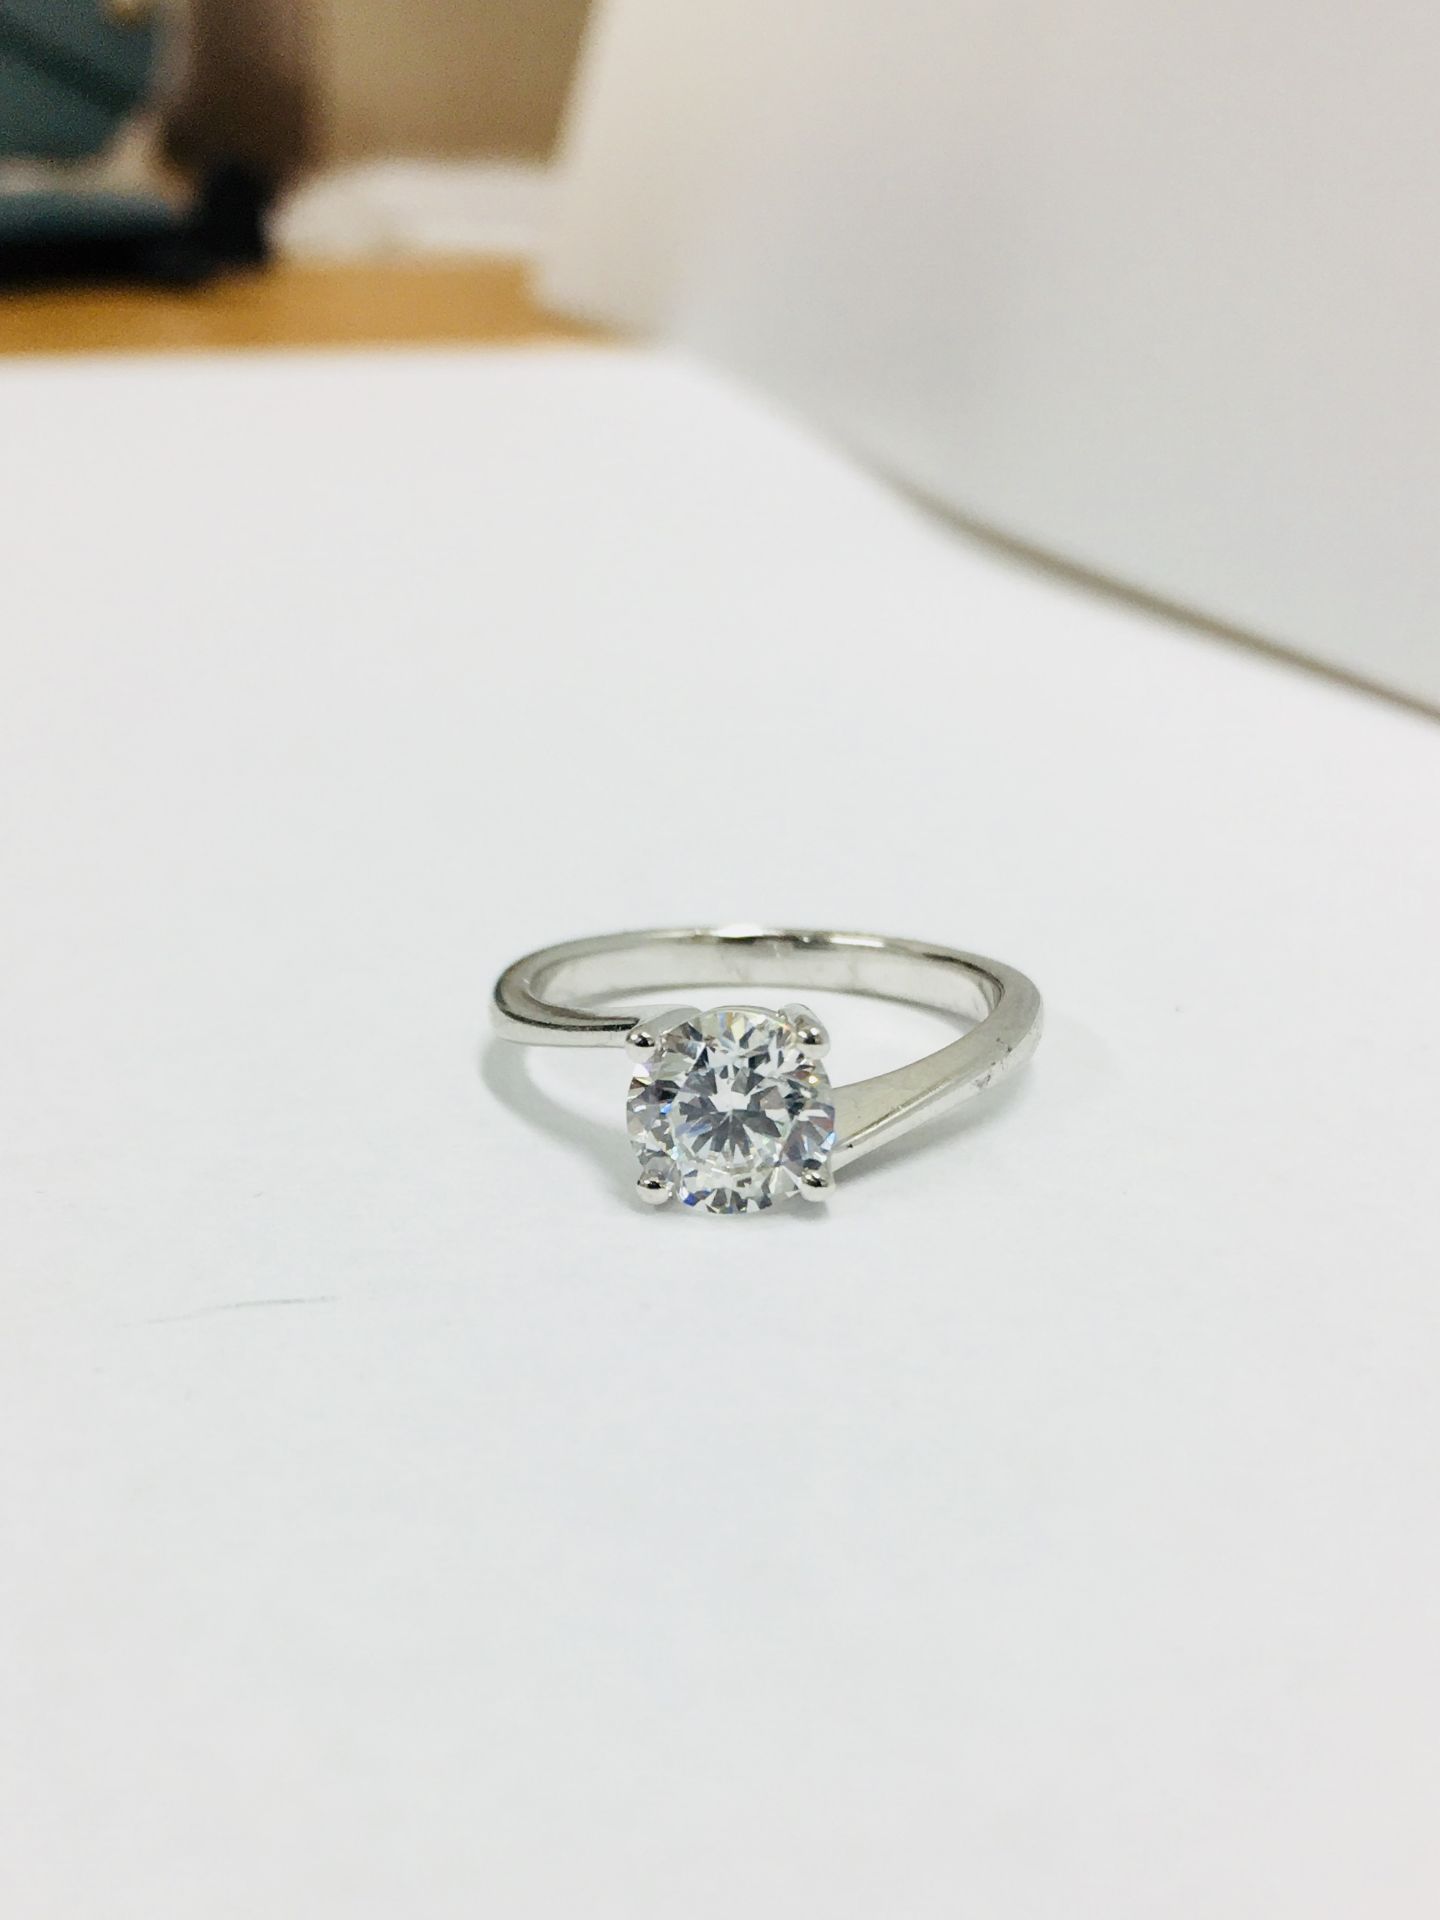 platinum twist solitaire ring,0.50ct brilliant cut diamond vs clarity D colour,platinum 2.9gms 950,